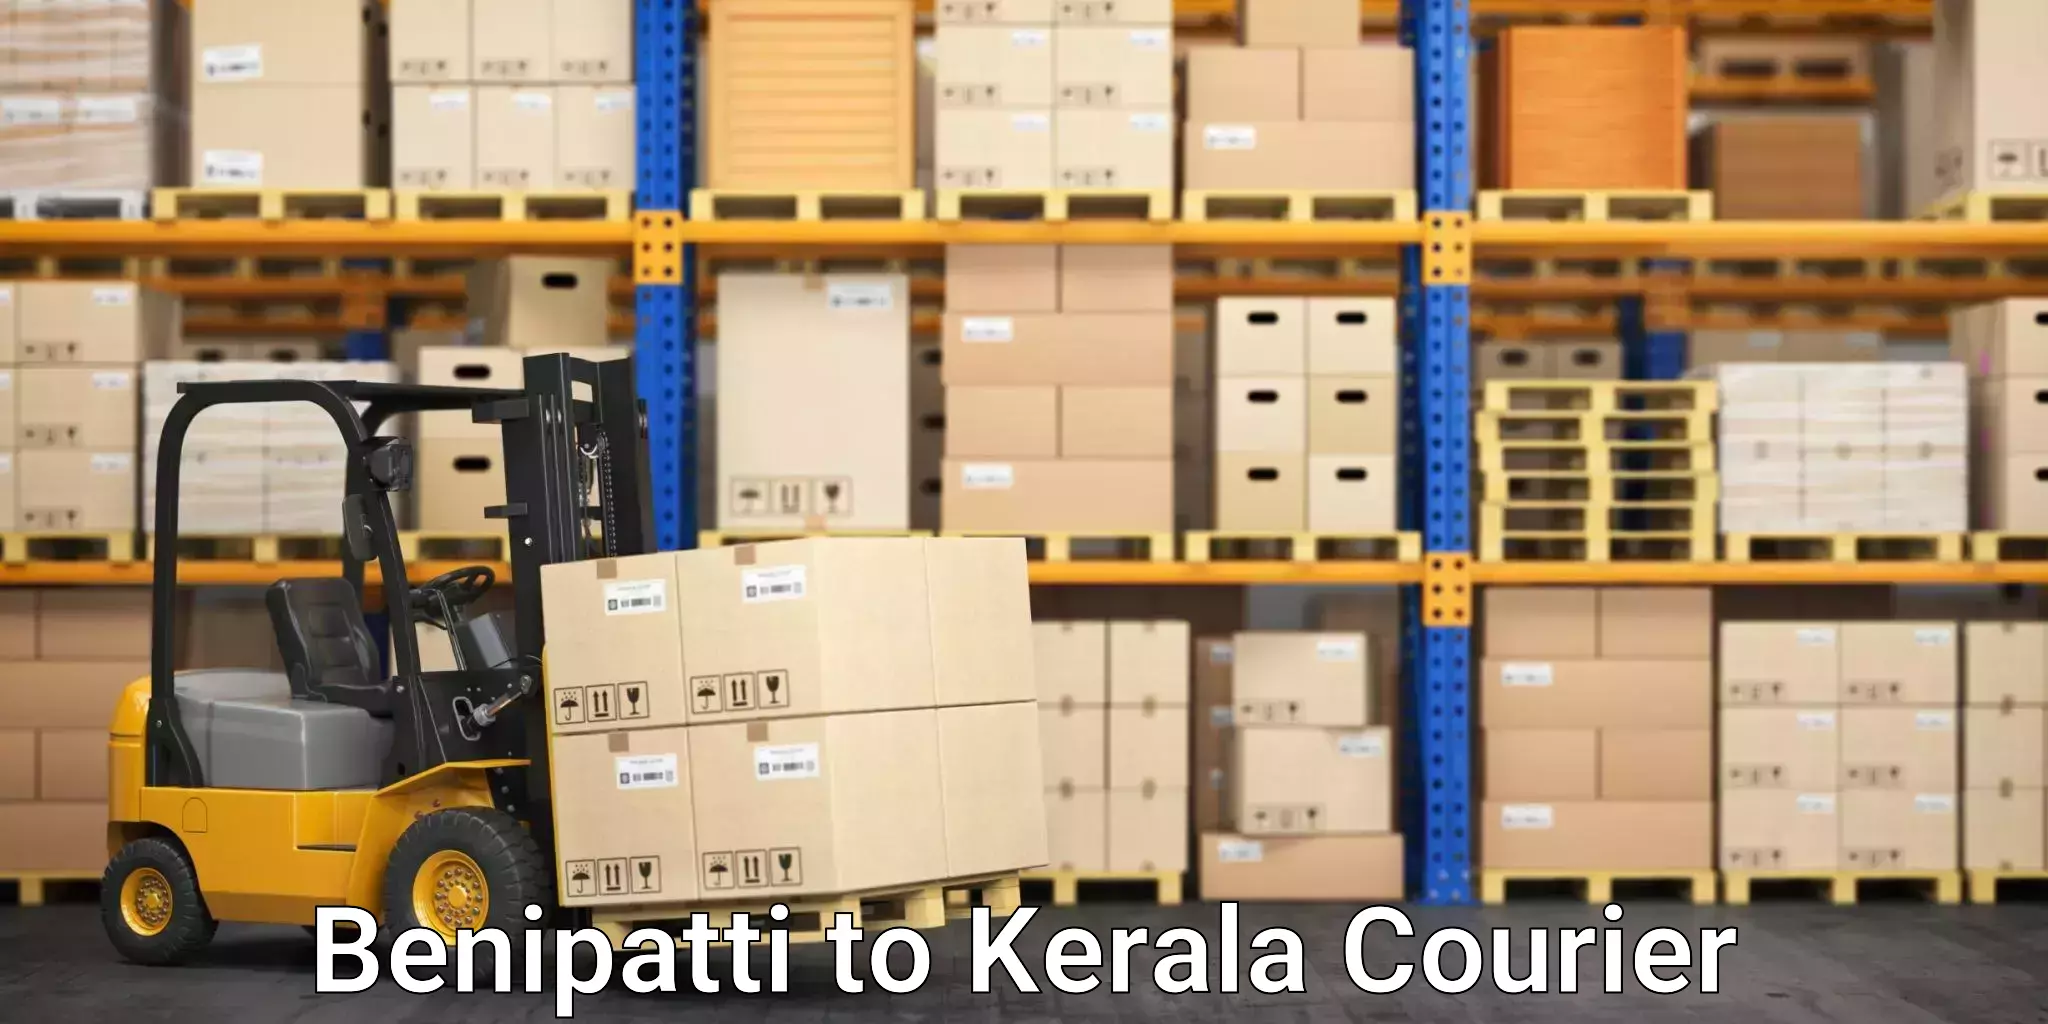 Quality moving company Benipatti to Kerala